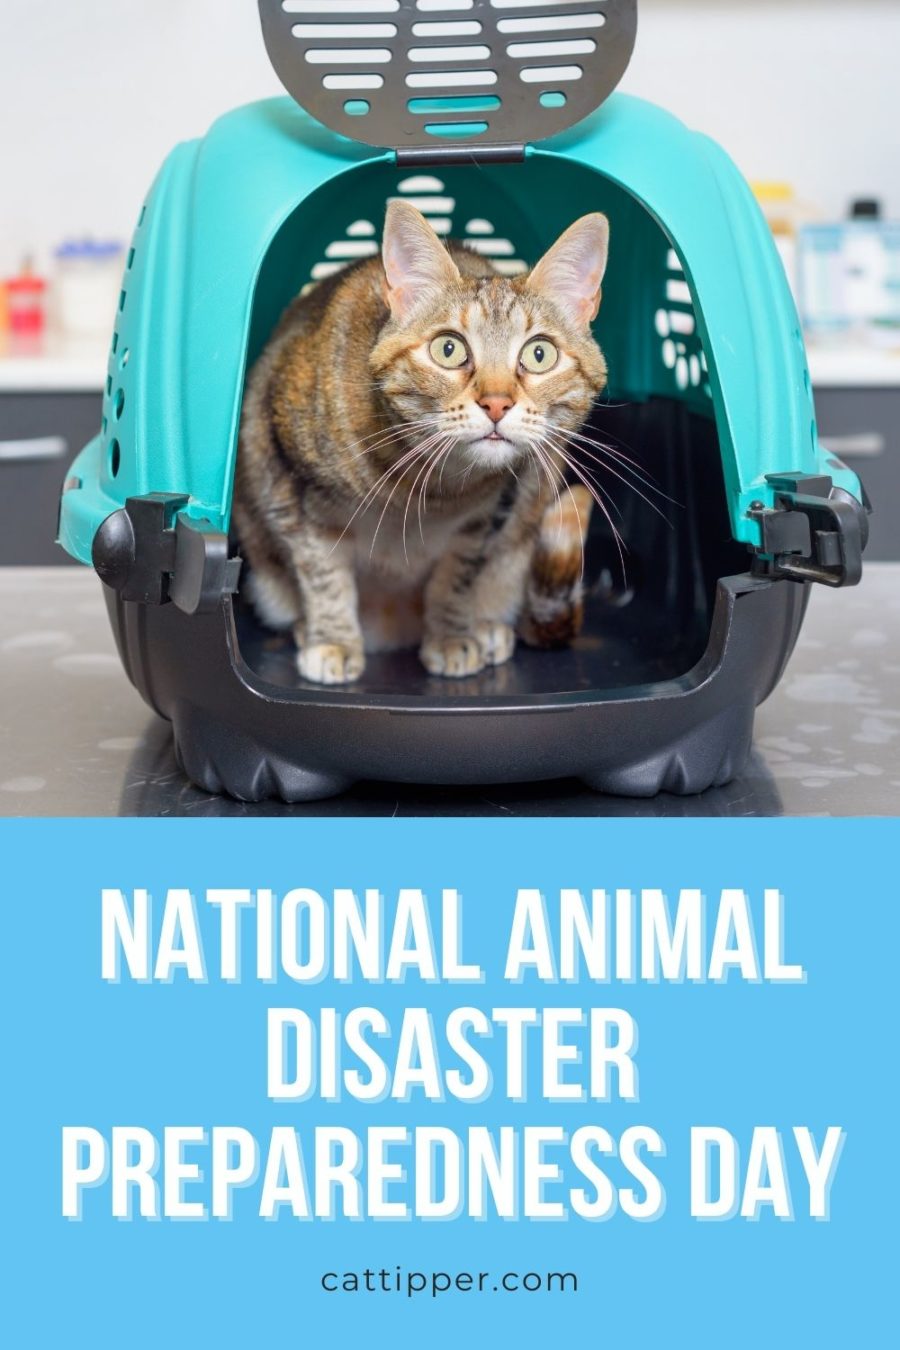 National Animal Disaster Preparedness Day